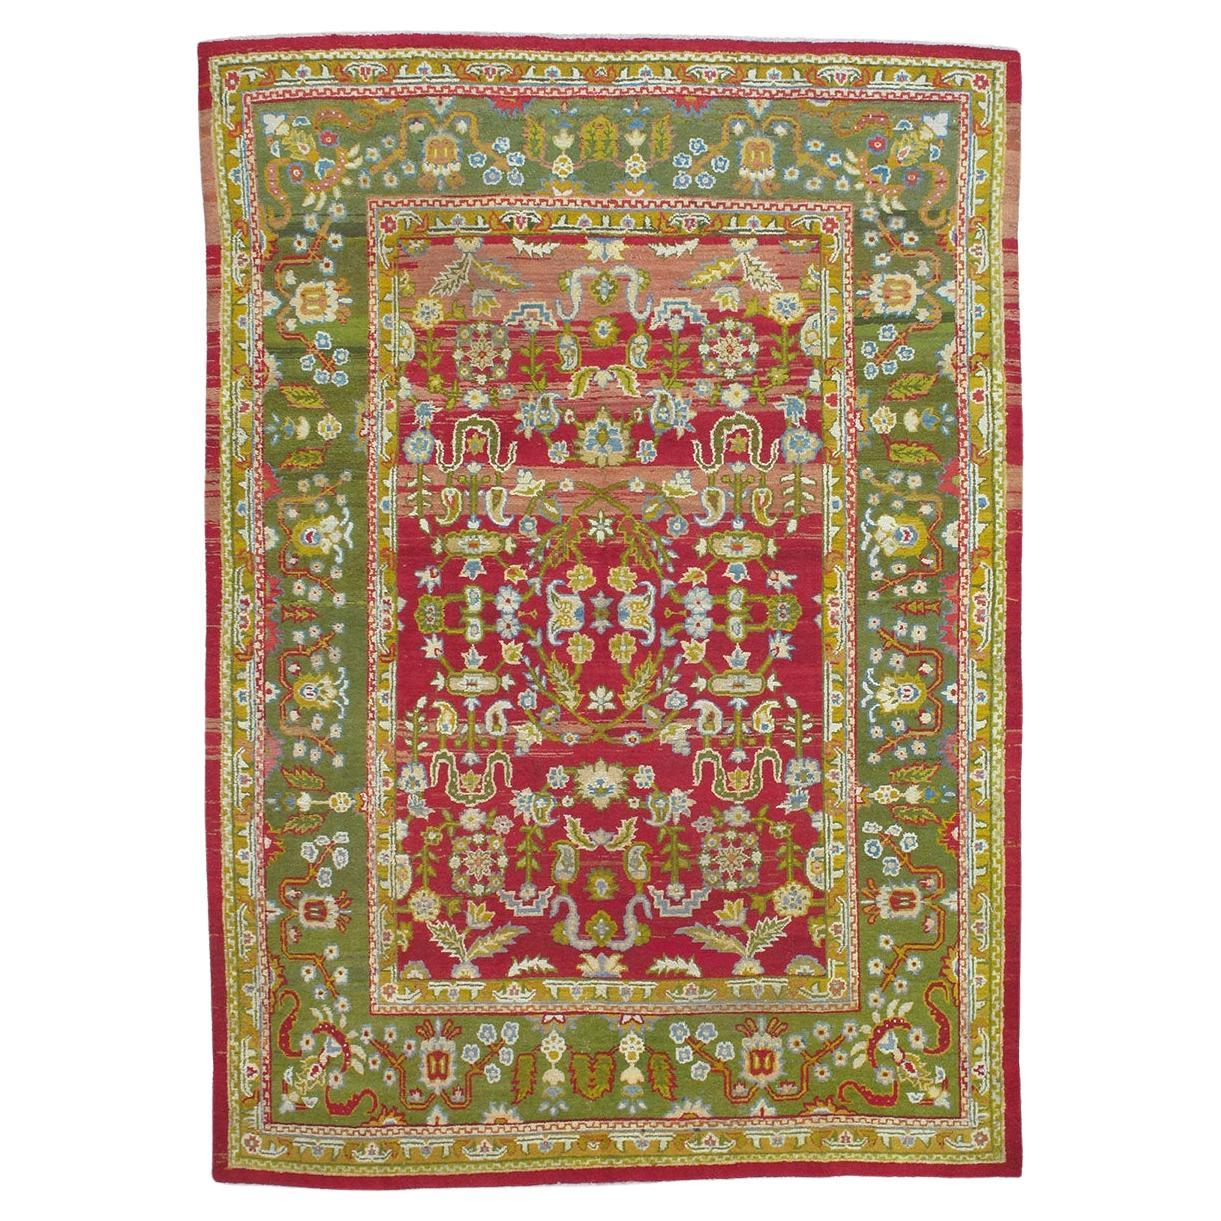 Antique Amritsar Carpet (DK-110-1) For Sale